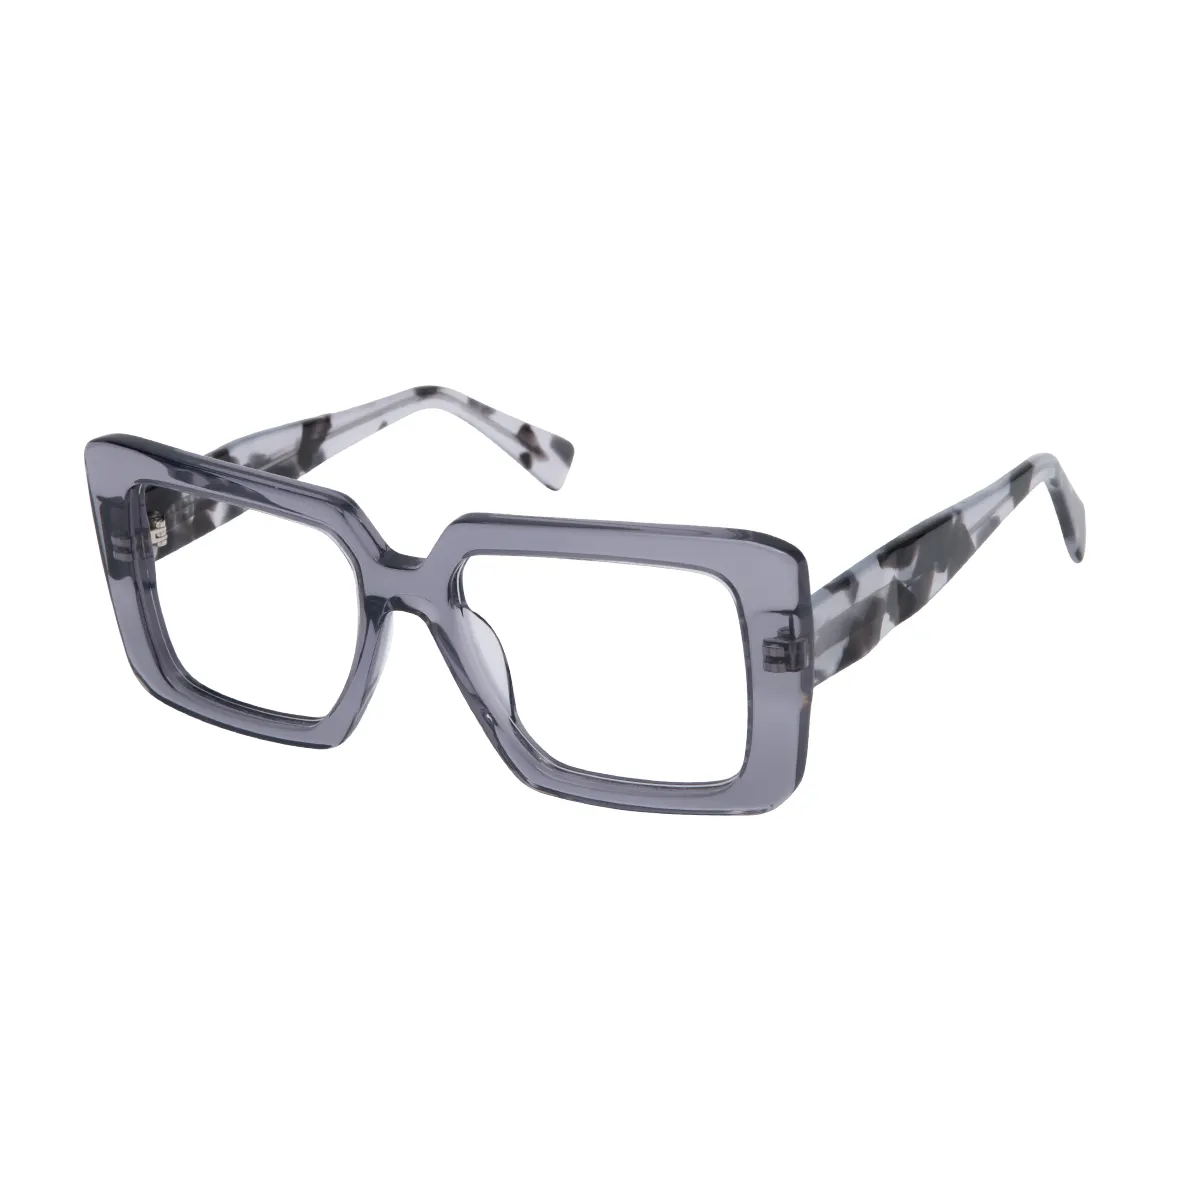 Figueroa - Square Gray Glasses for Women